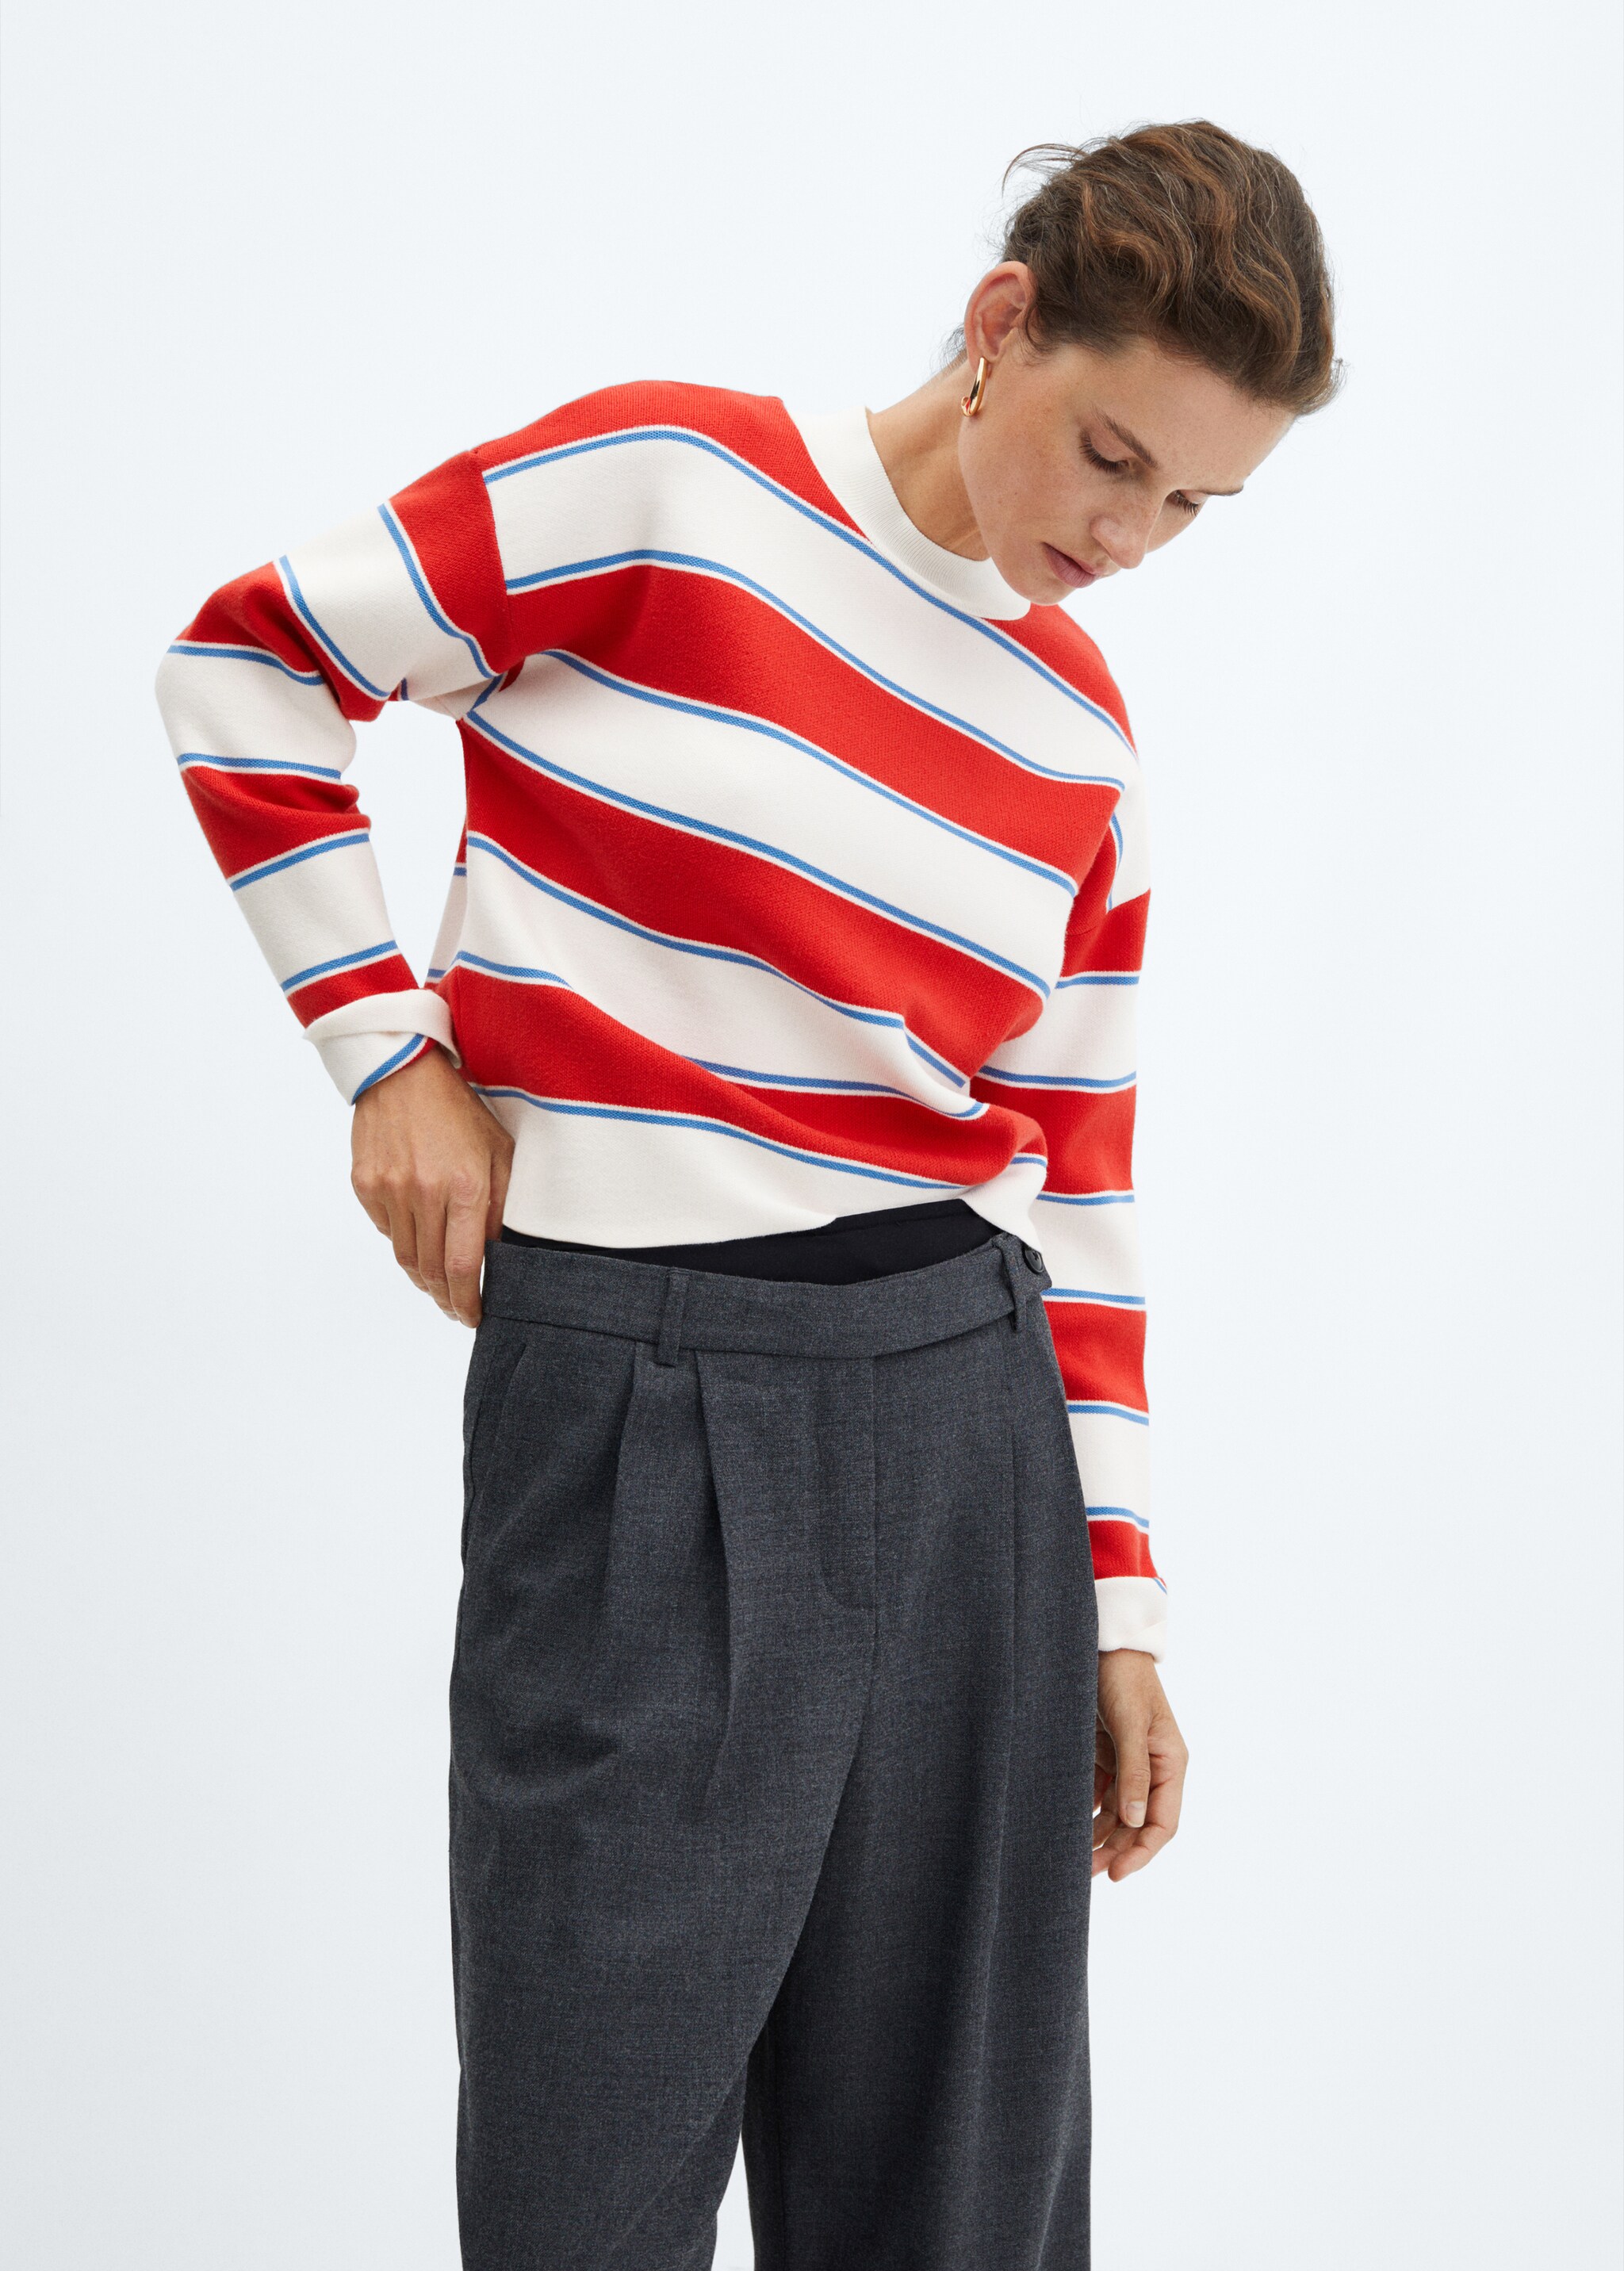 Wide-striped sweater - Medium plane